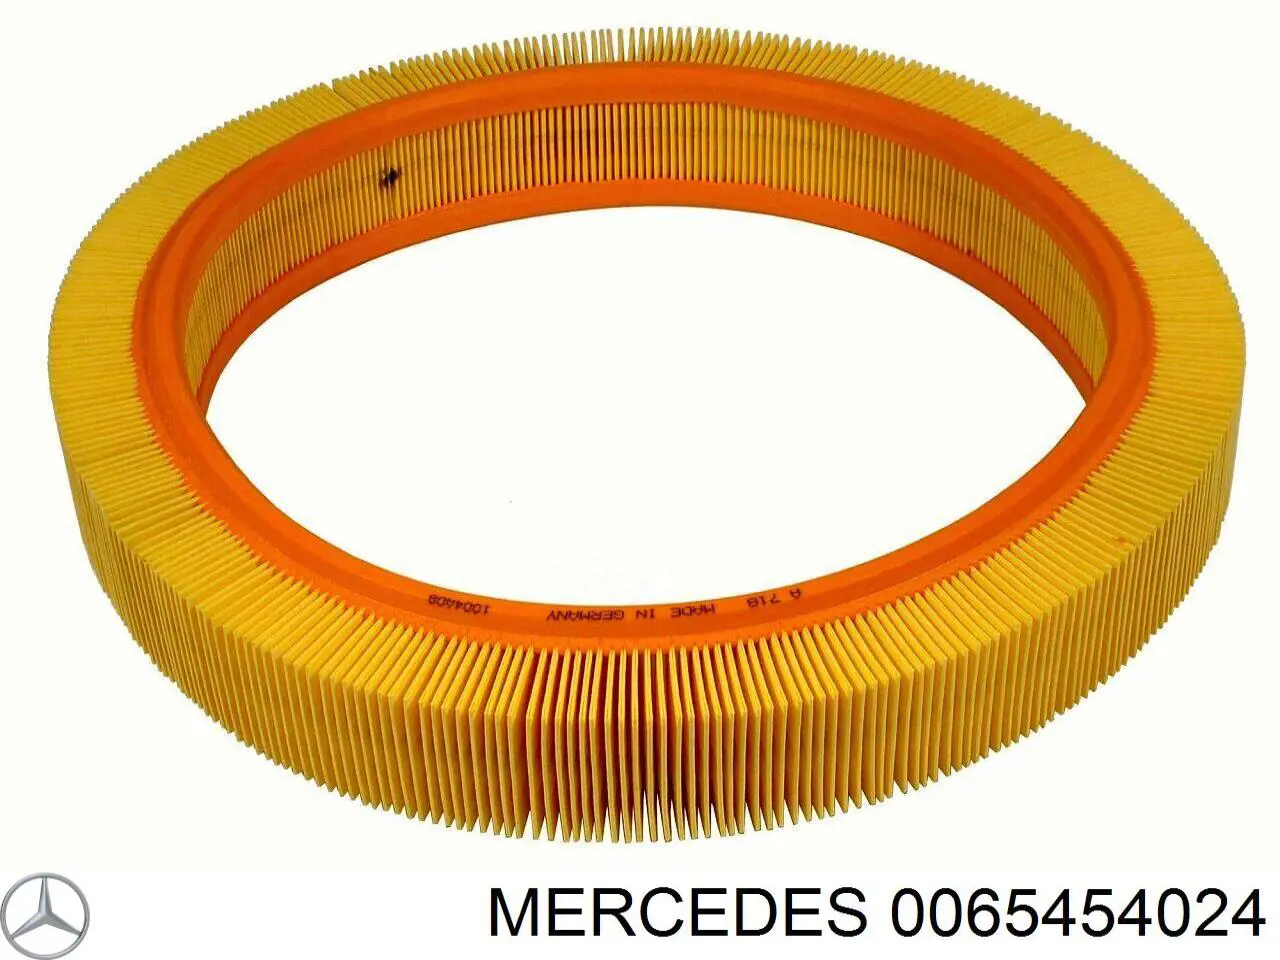 0065454024 Mercedes sensor, temperatura del refrigerante (encendido el ventilador del radiador)